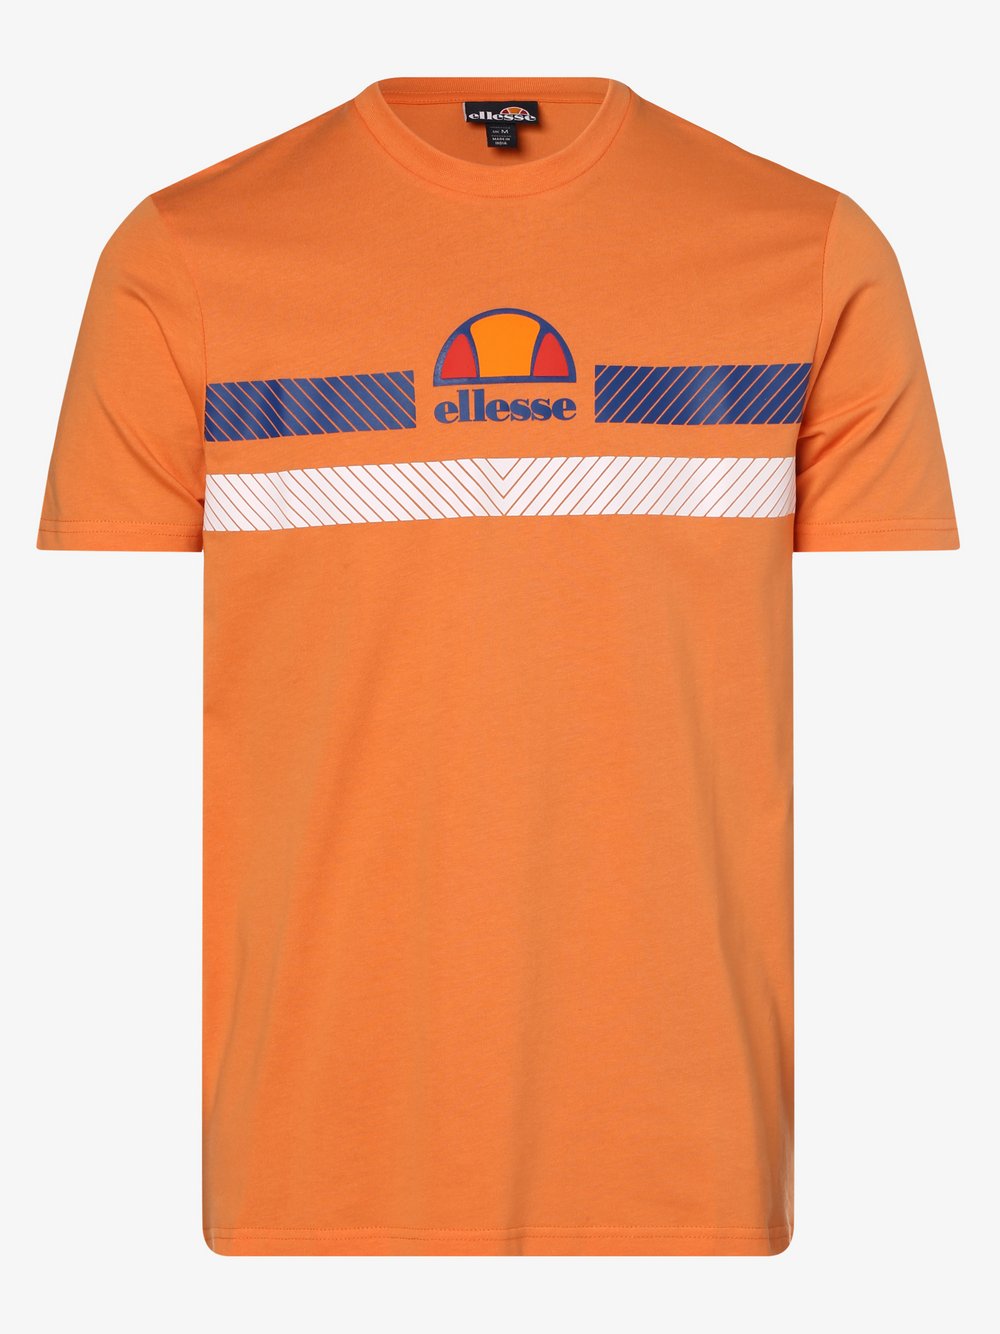 ellesse - T-shirt męski – Glisenta, pomarańczowy